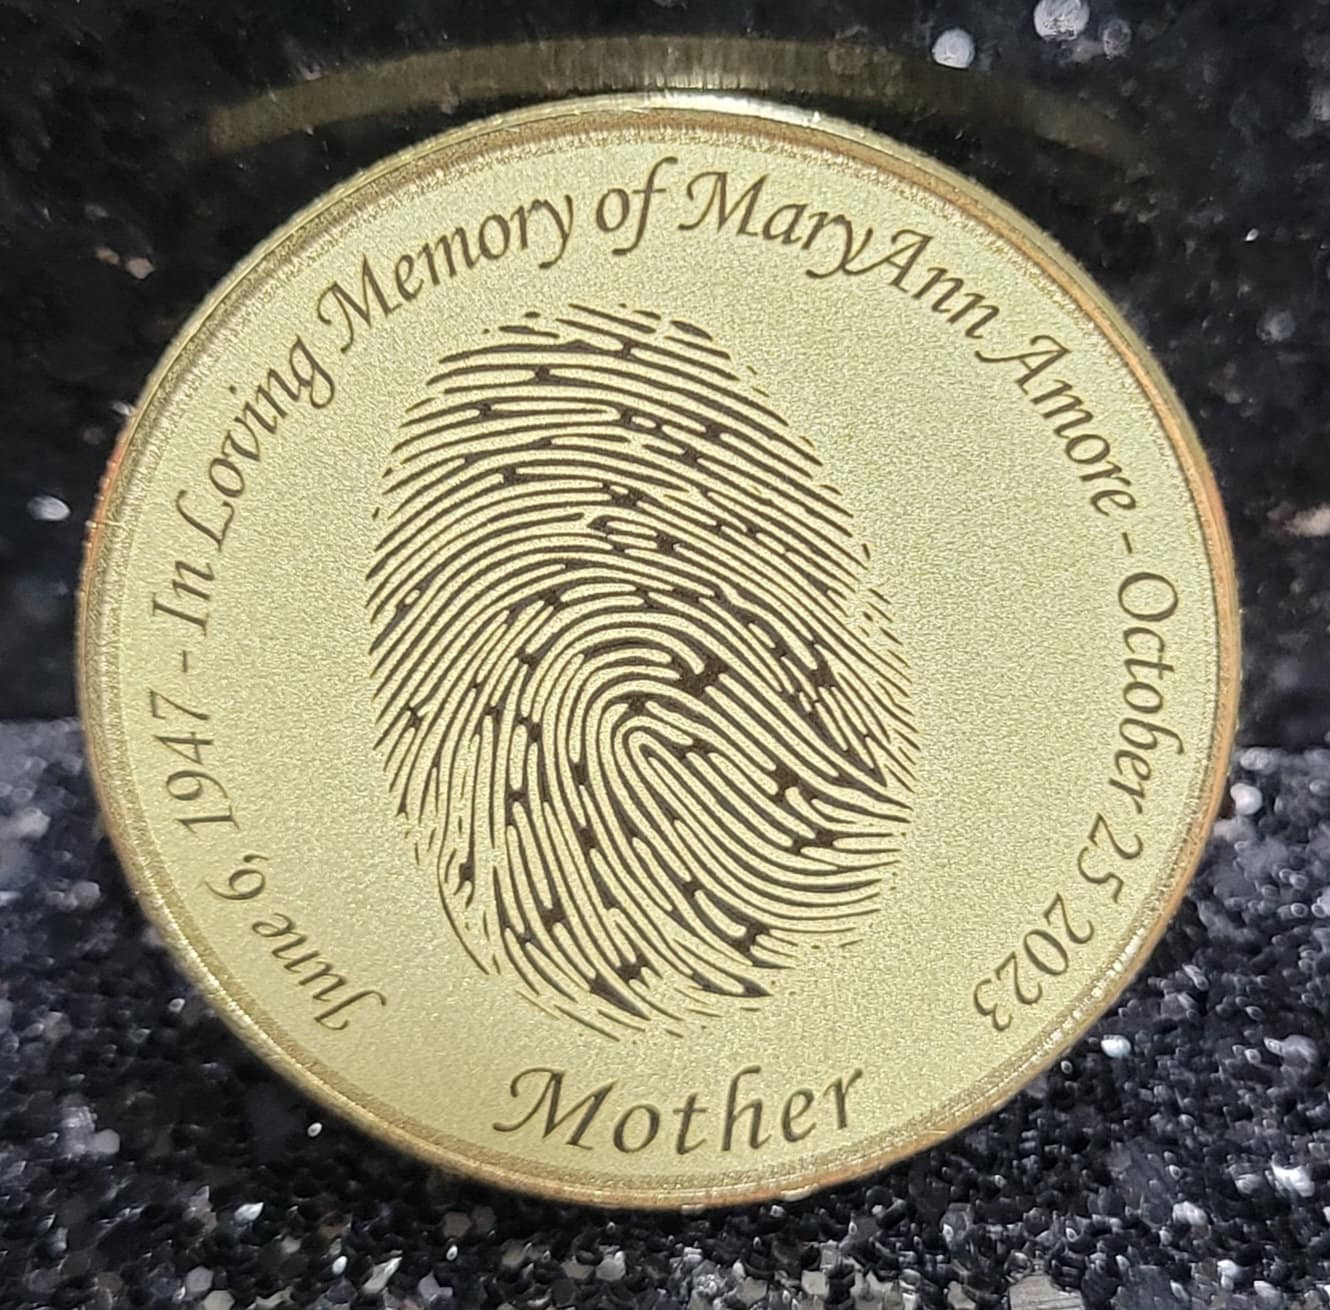 Guardian Angel Coin Finger print Coin Memorial Token Pocket Purse Token Lost Loved One Funeral Gift Grieving Family Gift Coin Fingerprint